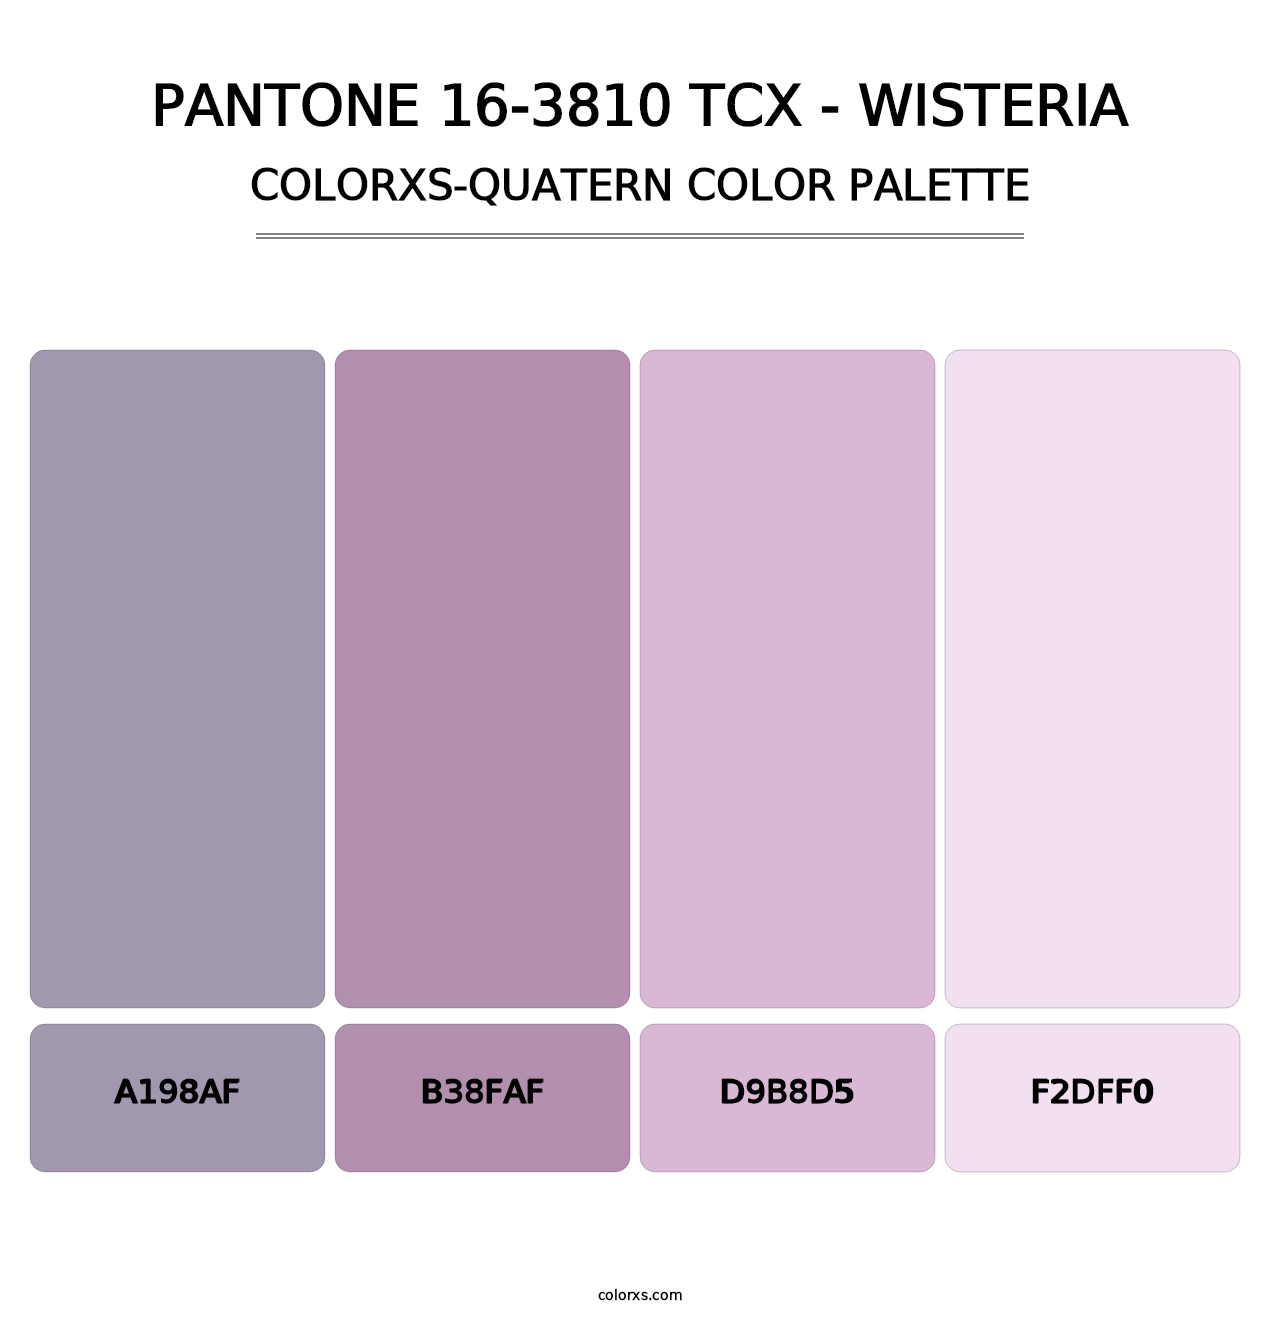 PANTONE 16-3810 TCX - Wisteria - Colorxs Quatern Palette